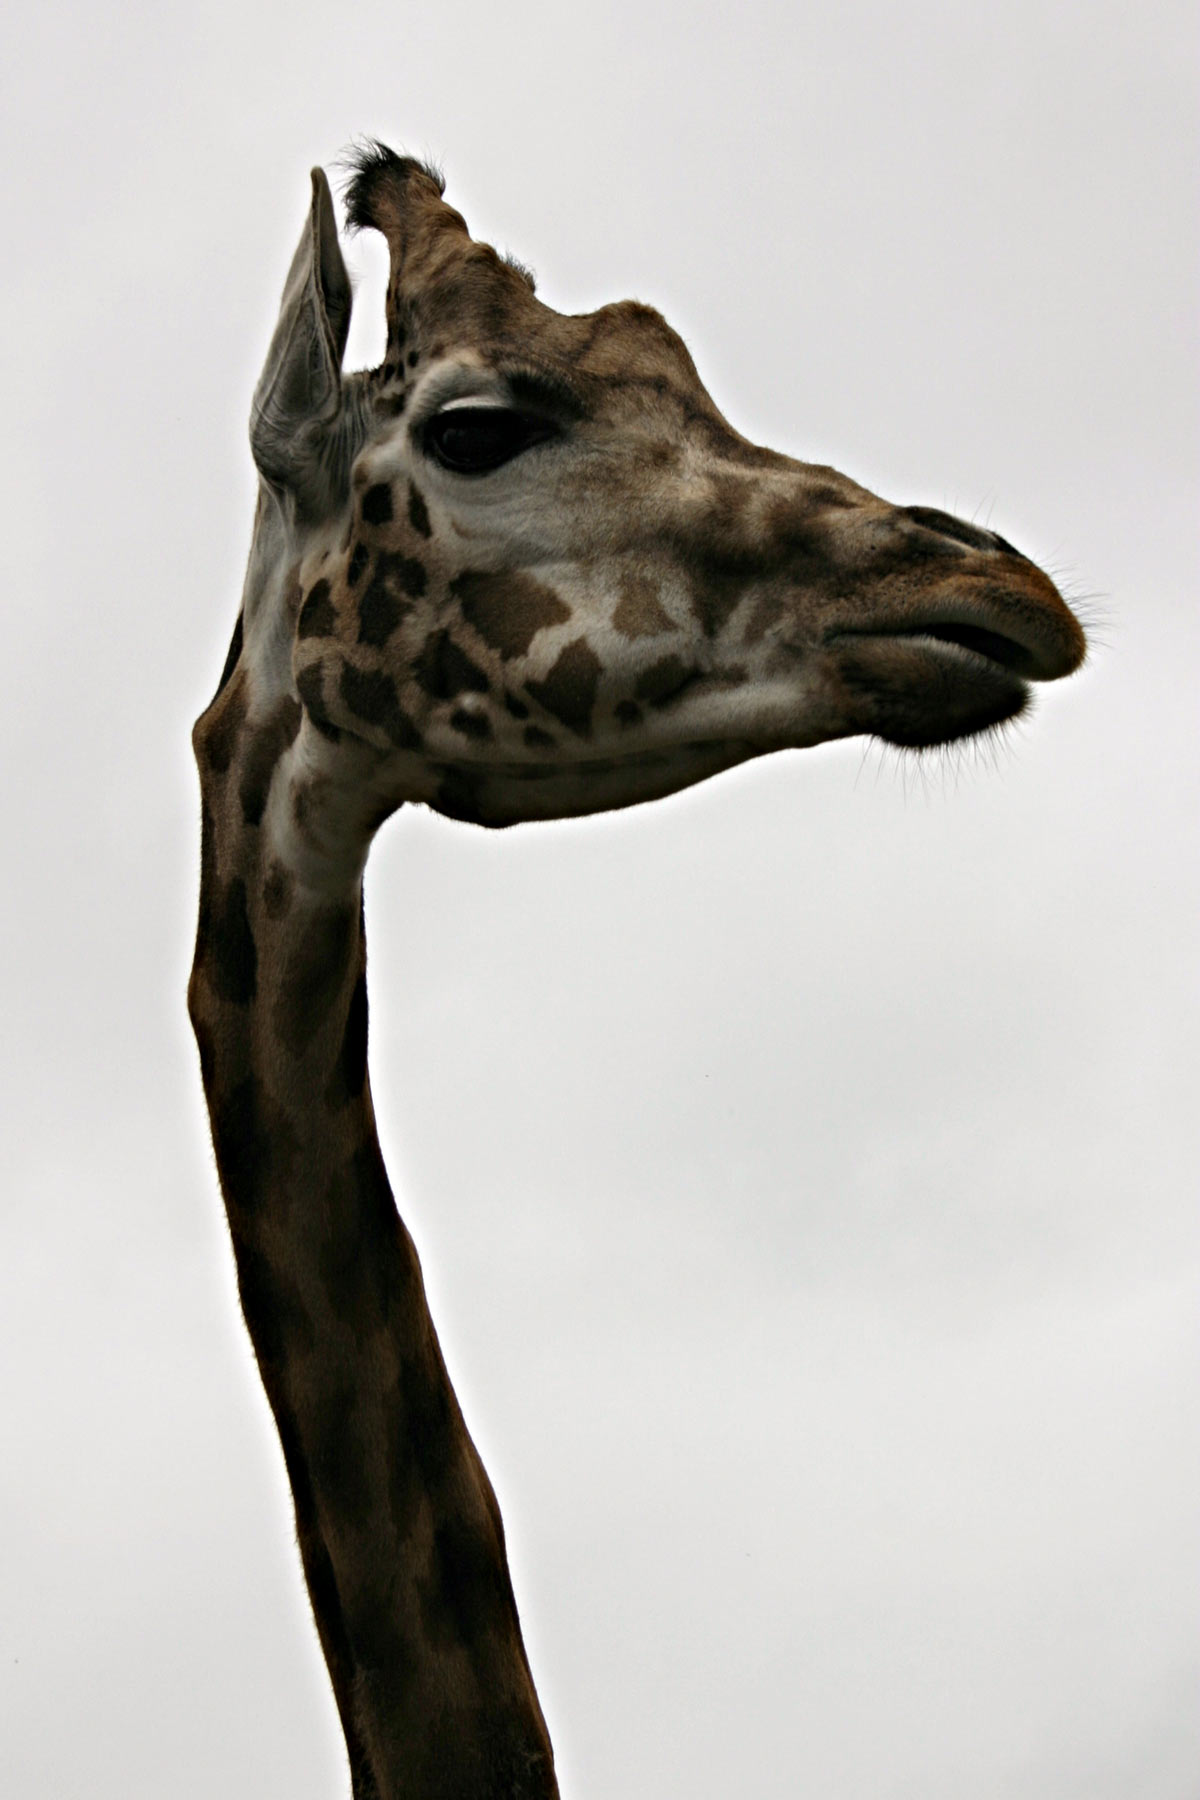 Giraf closeup photo